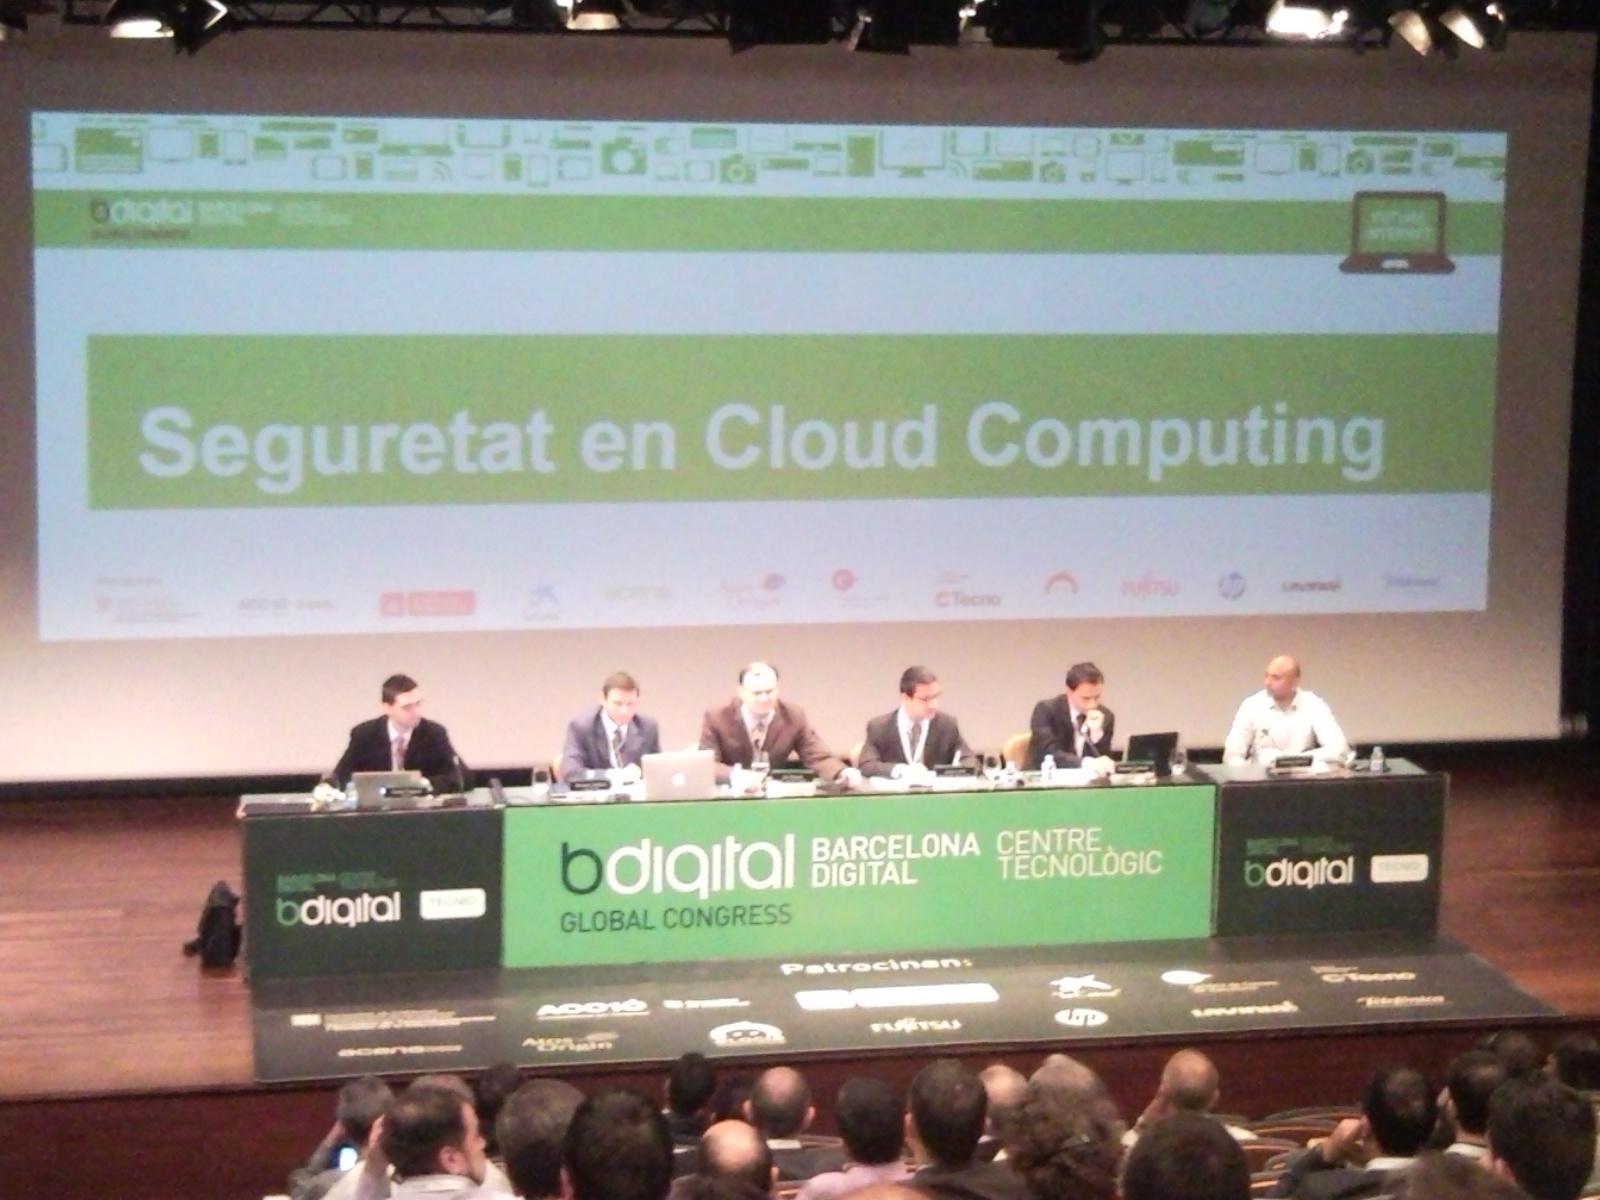 El futuro del Cloud Computing